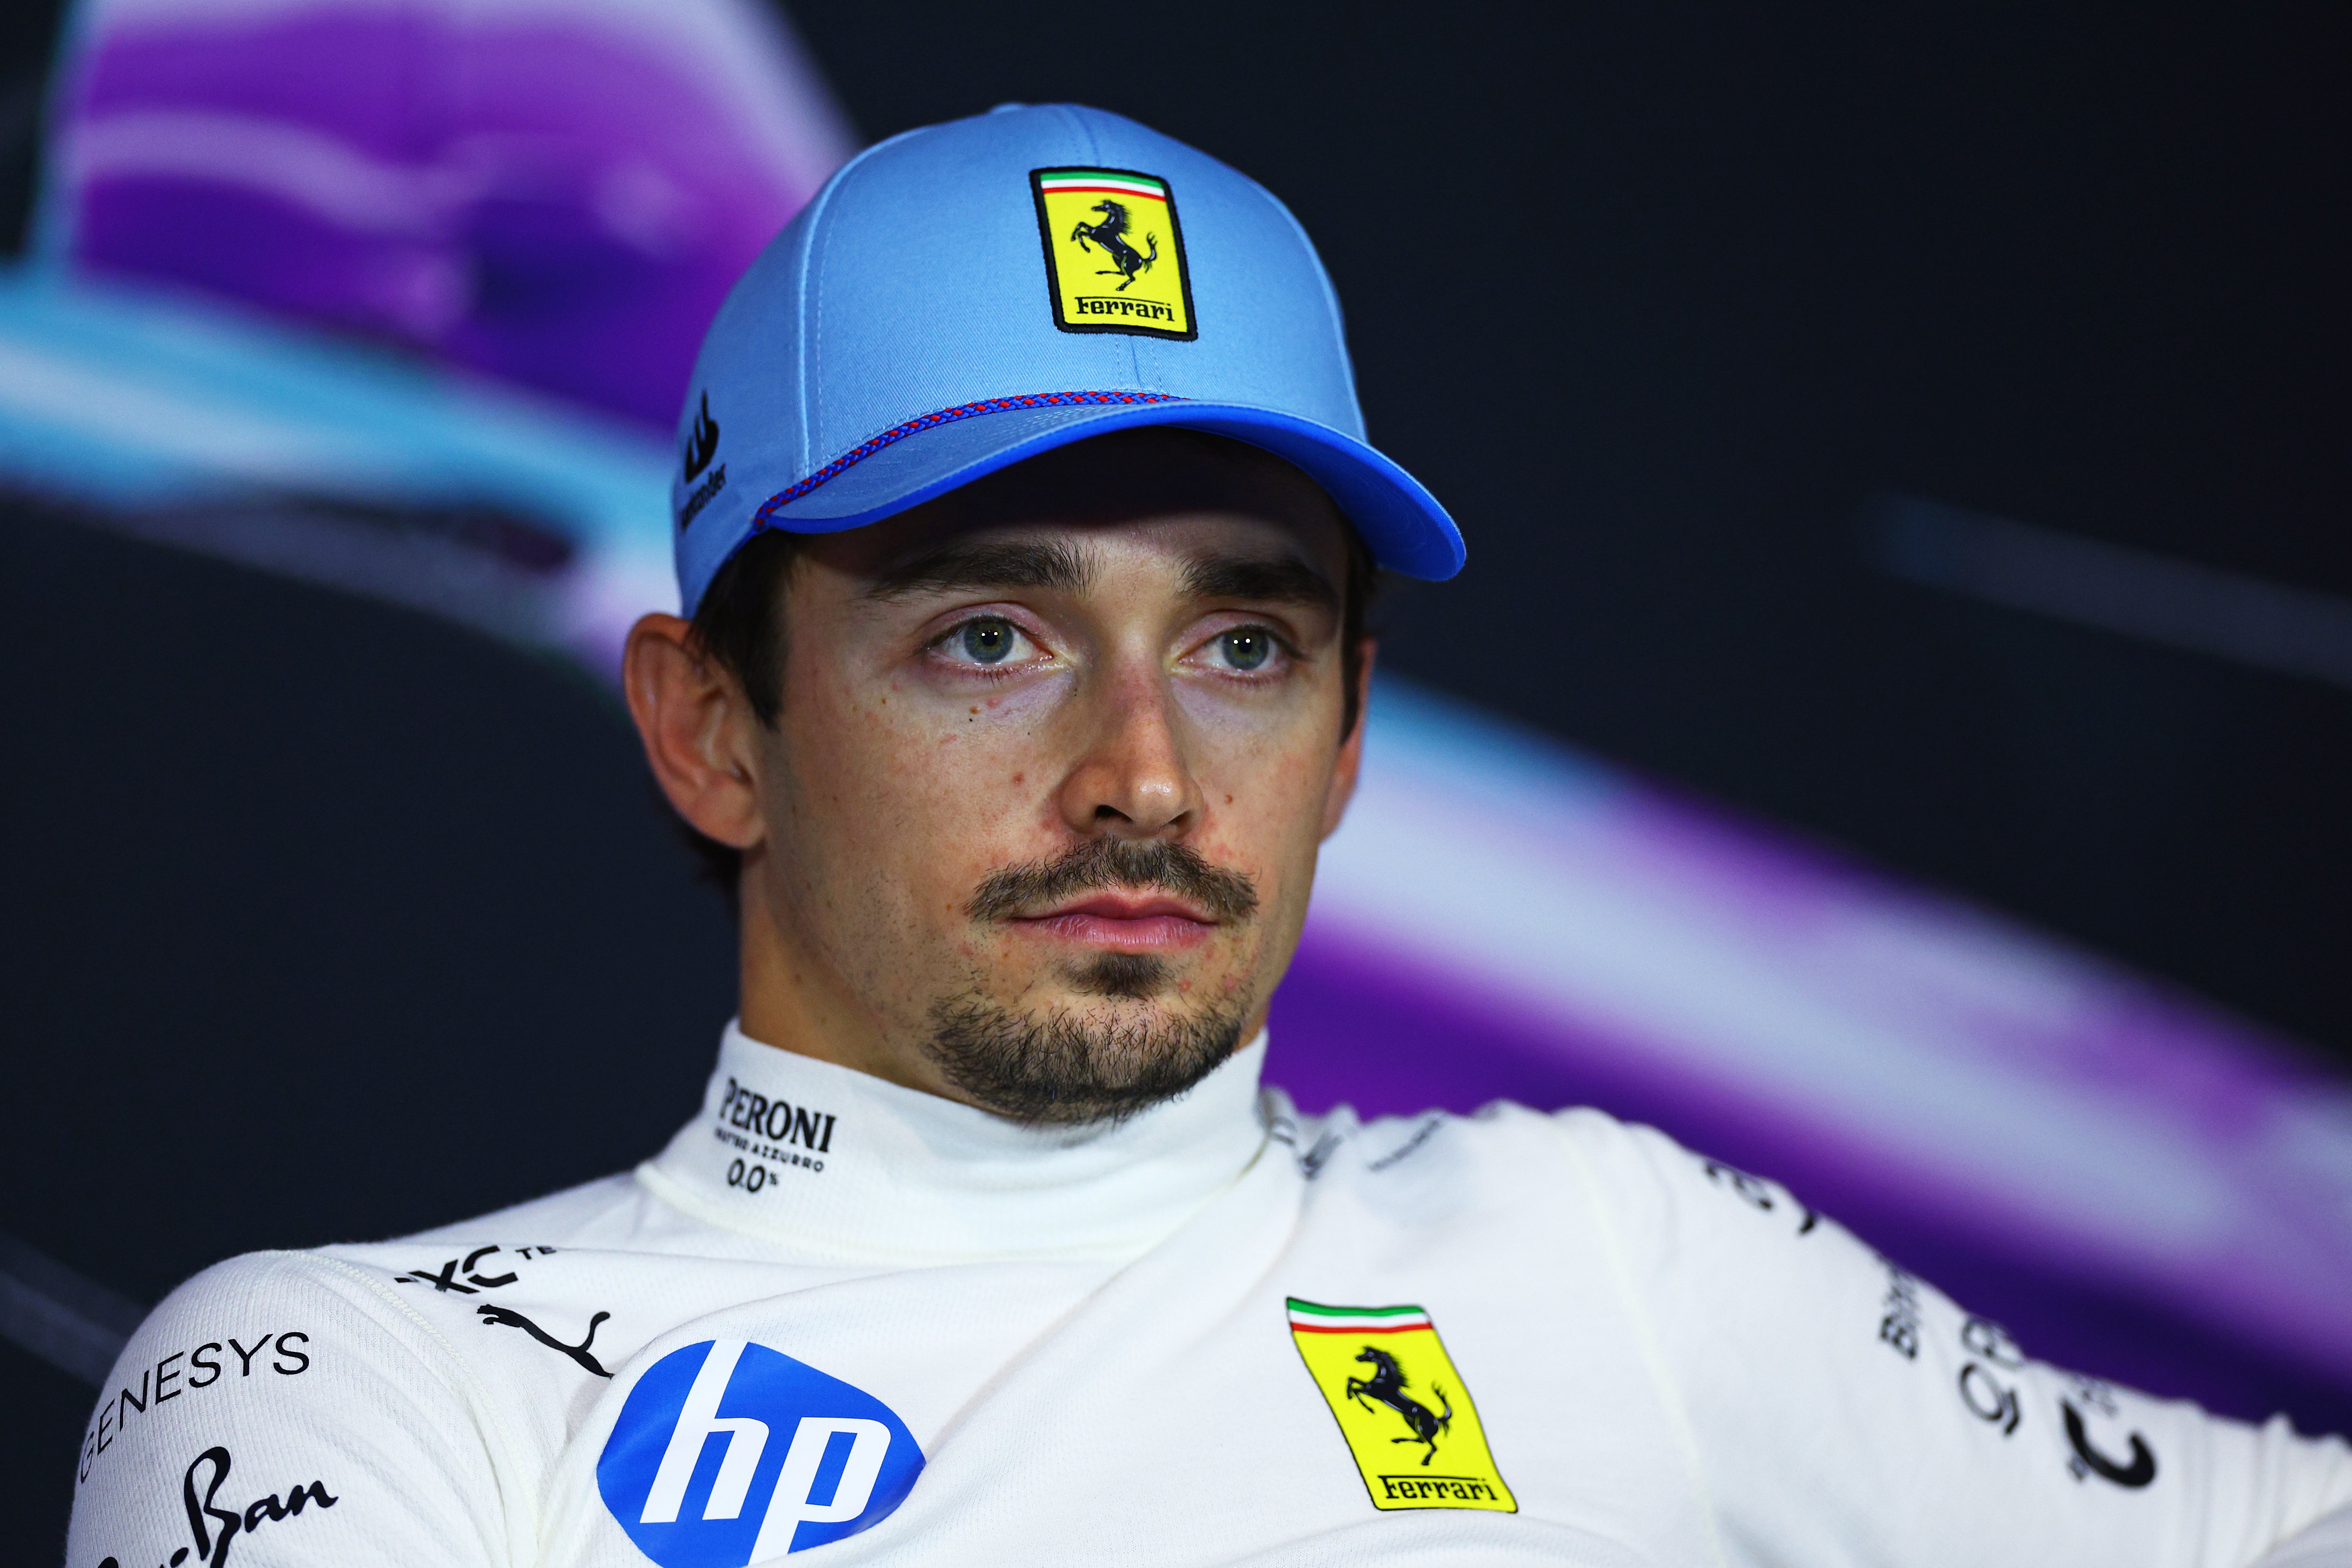 Charles Leclerc has changed race engineer ahead of Imola next week